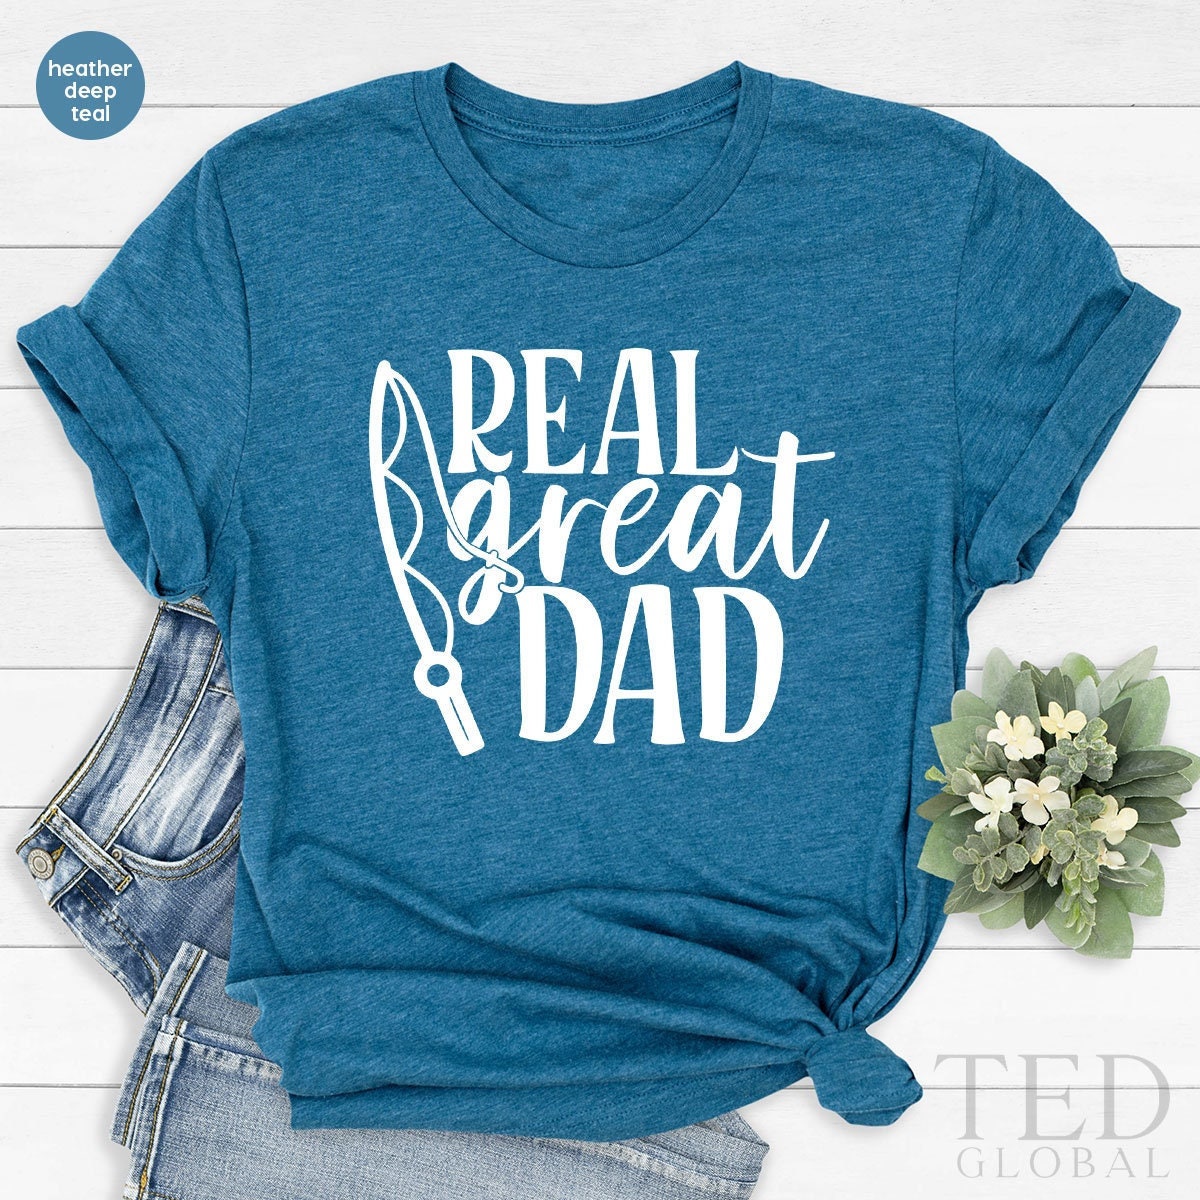 Fishing Dad Shirt, Real Great Dad Shirt, Fathers Day Tee, Fishing Gift, Fly Fishing Shirt, Gift for Dad, Reel Cool Dad , Fisherman Shirt